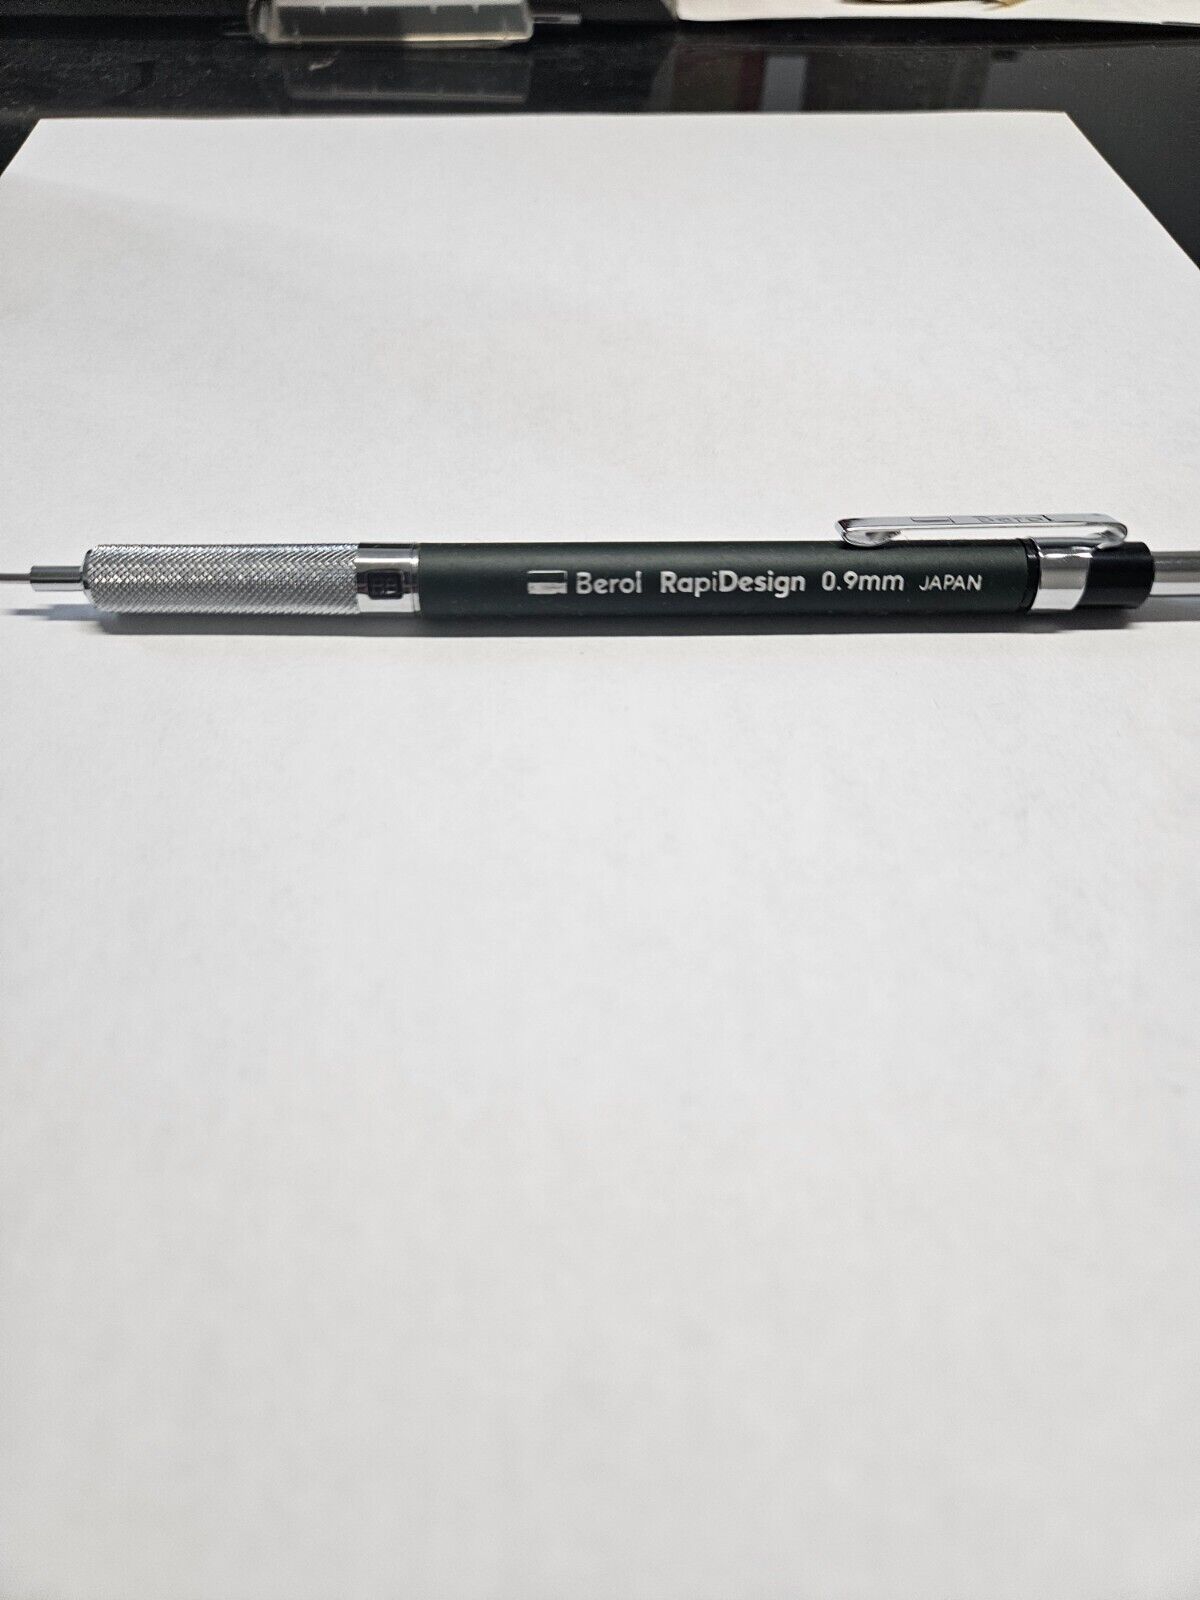 NOS berol RapiDesign Mechanical Pencil metal grip vintage .9mm